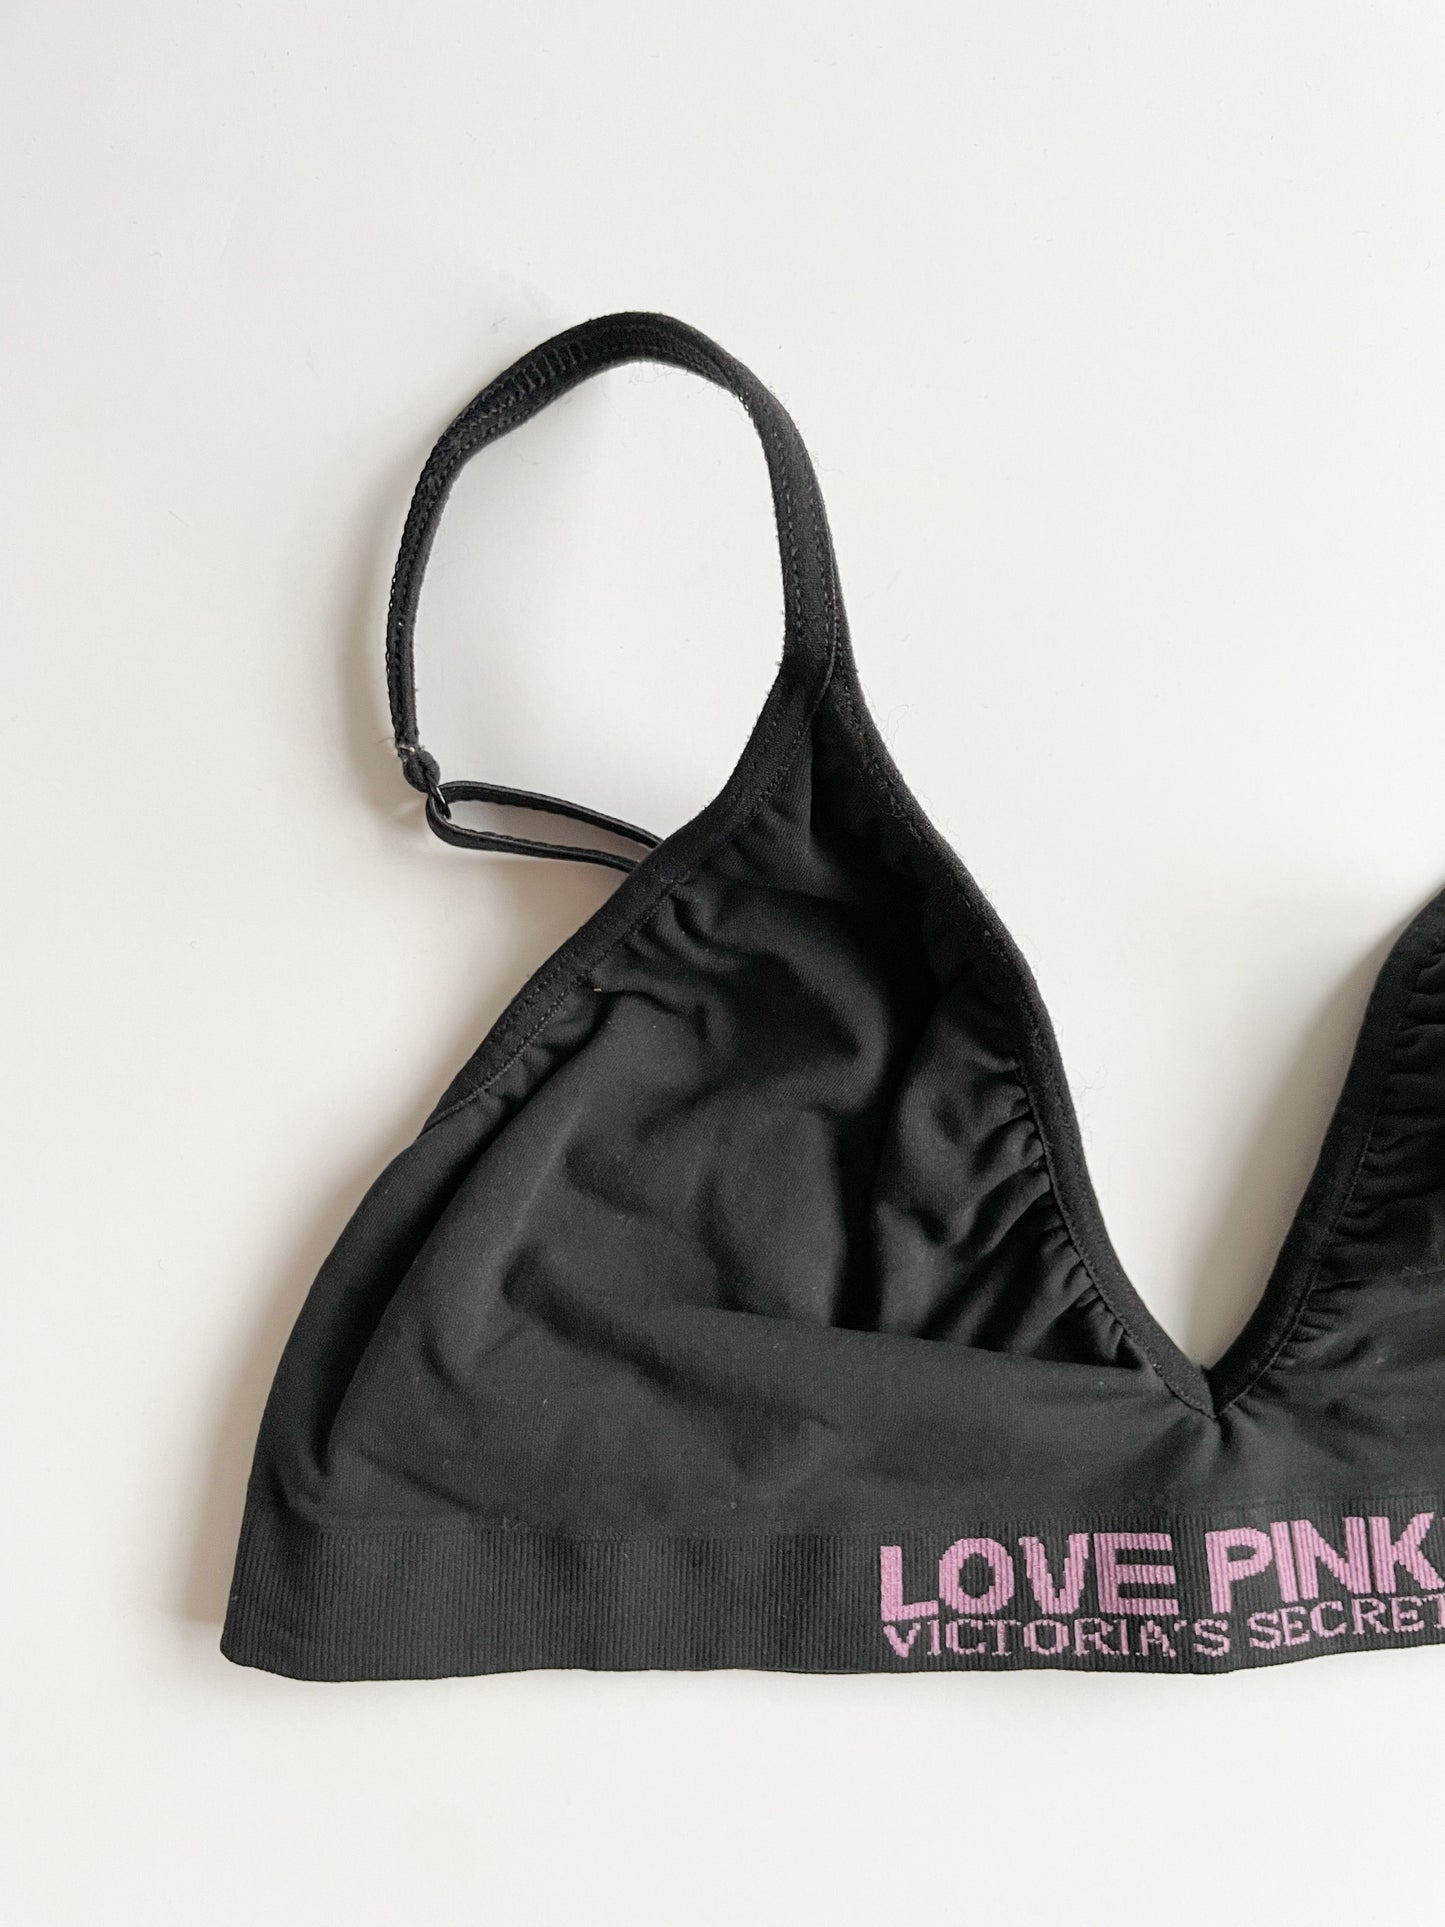 PINK Victoria's Secret Black Adjustable Lounge Triangle Bralette Top - Medium